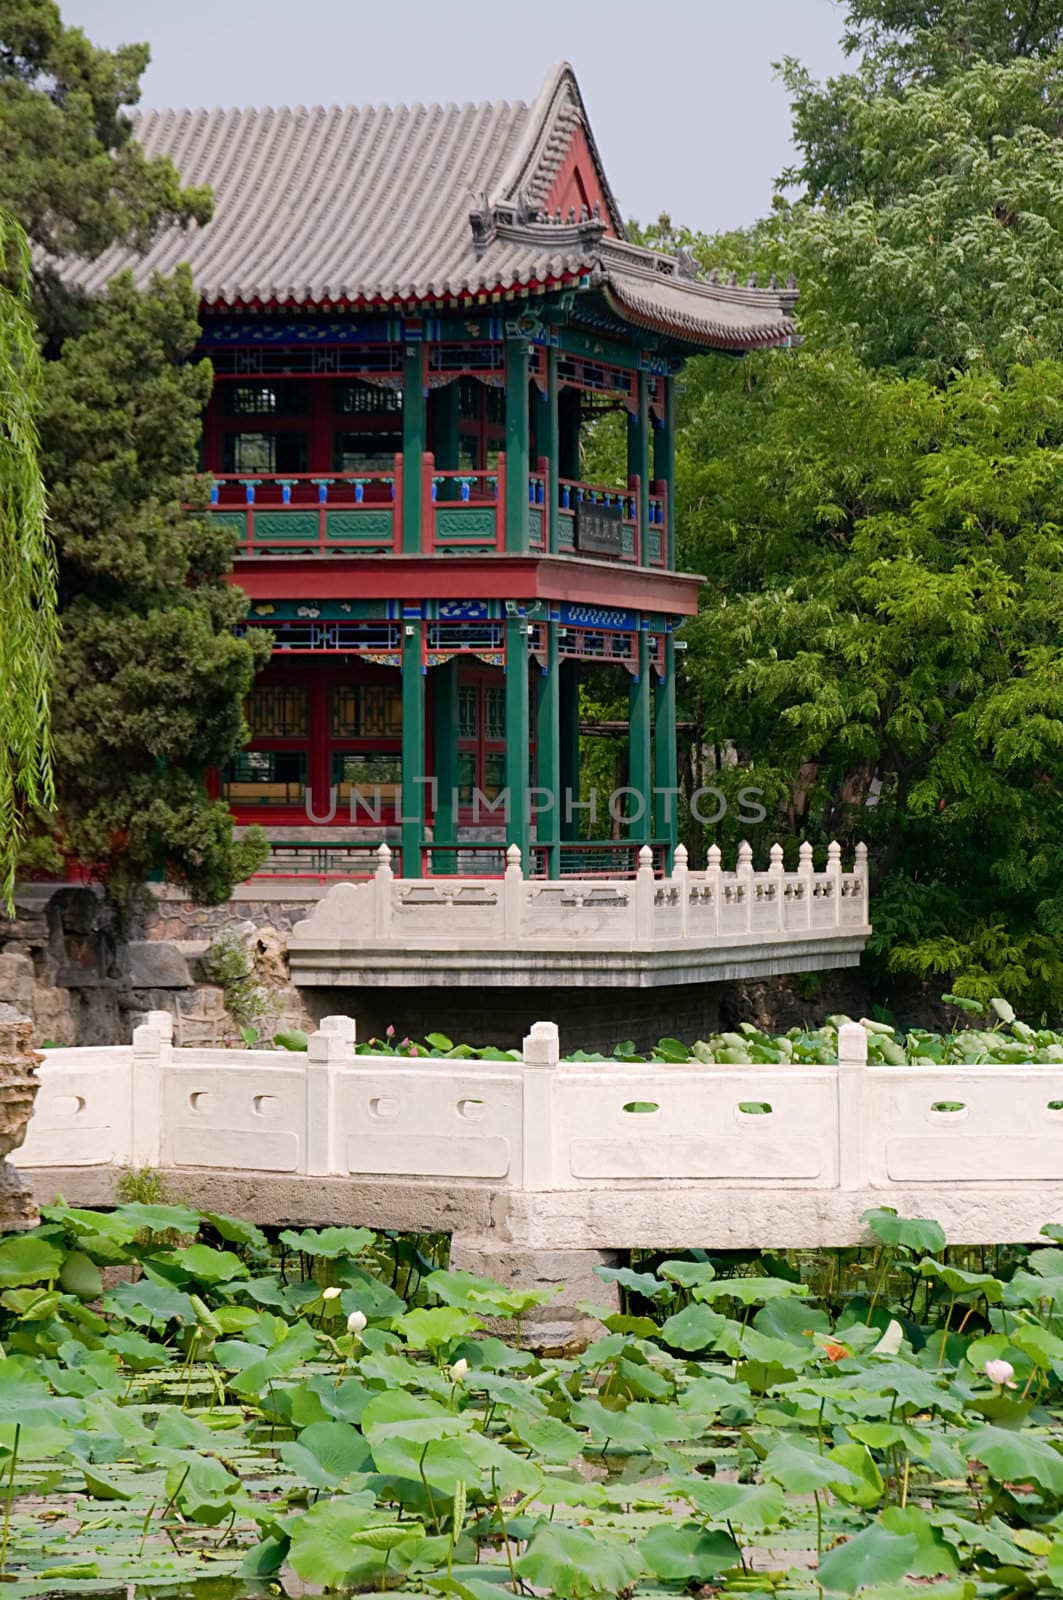 The panorama of lotus pond, garden with pavilion